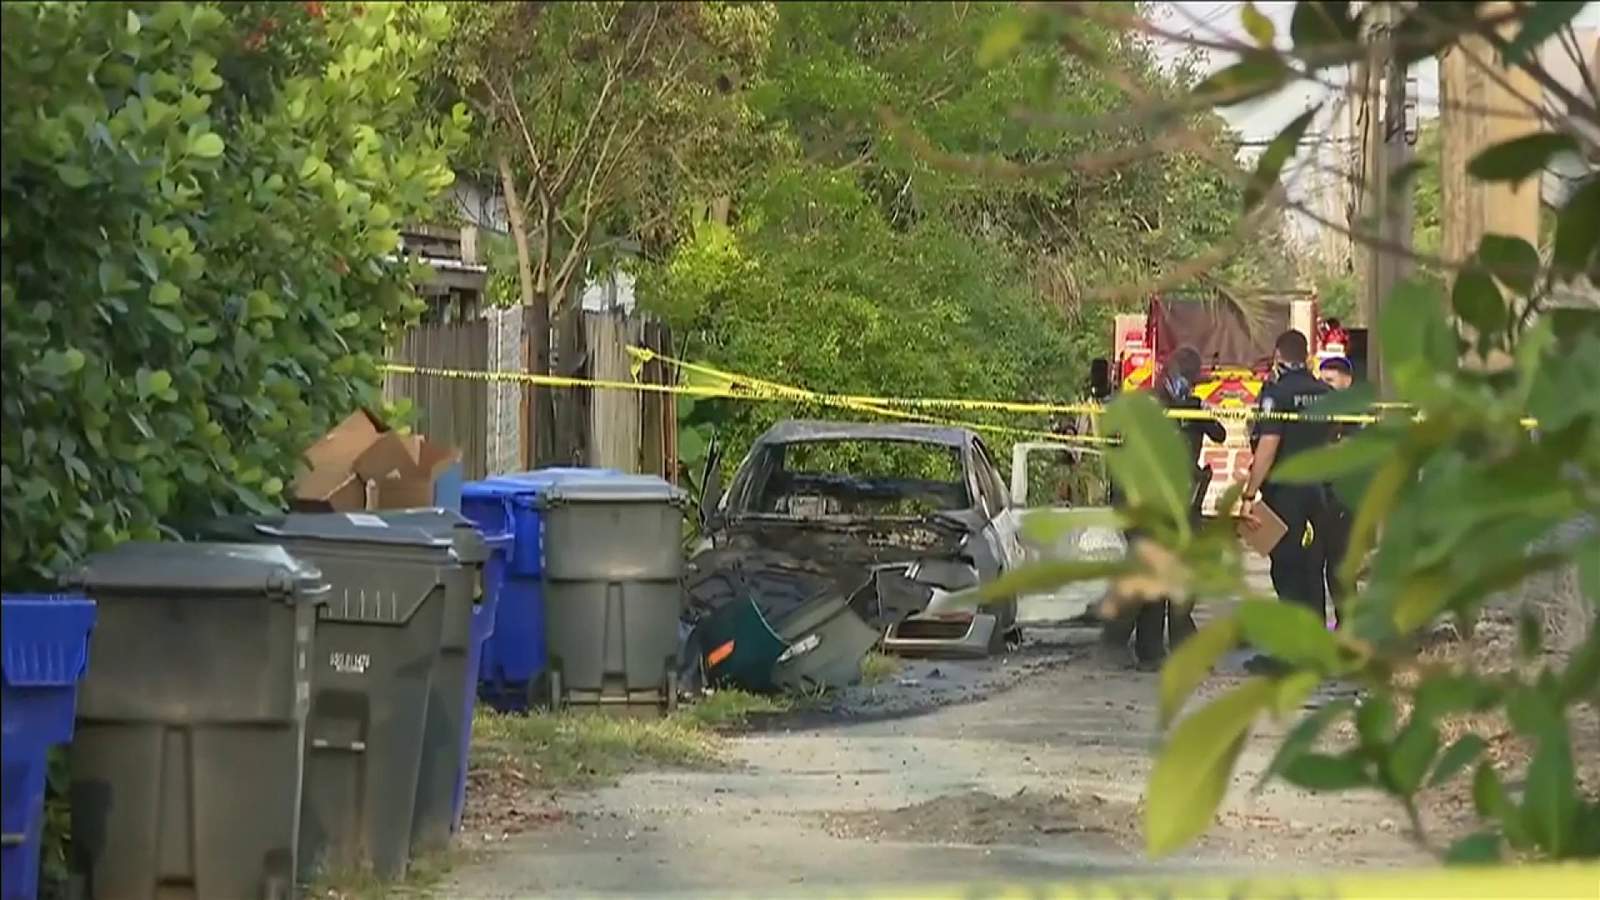 Body found inside car on fire in Hollywood alley